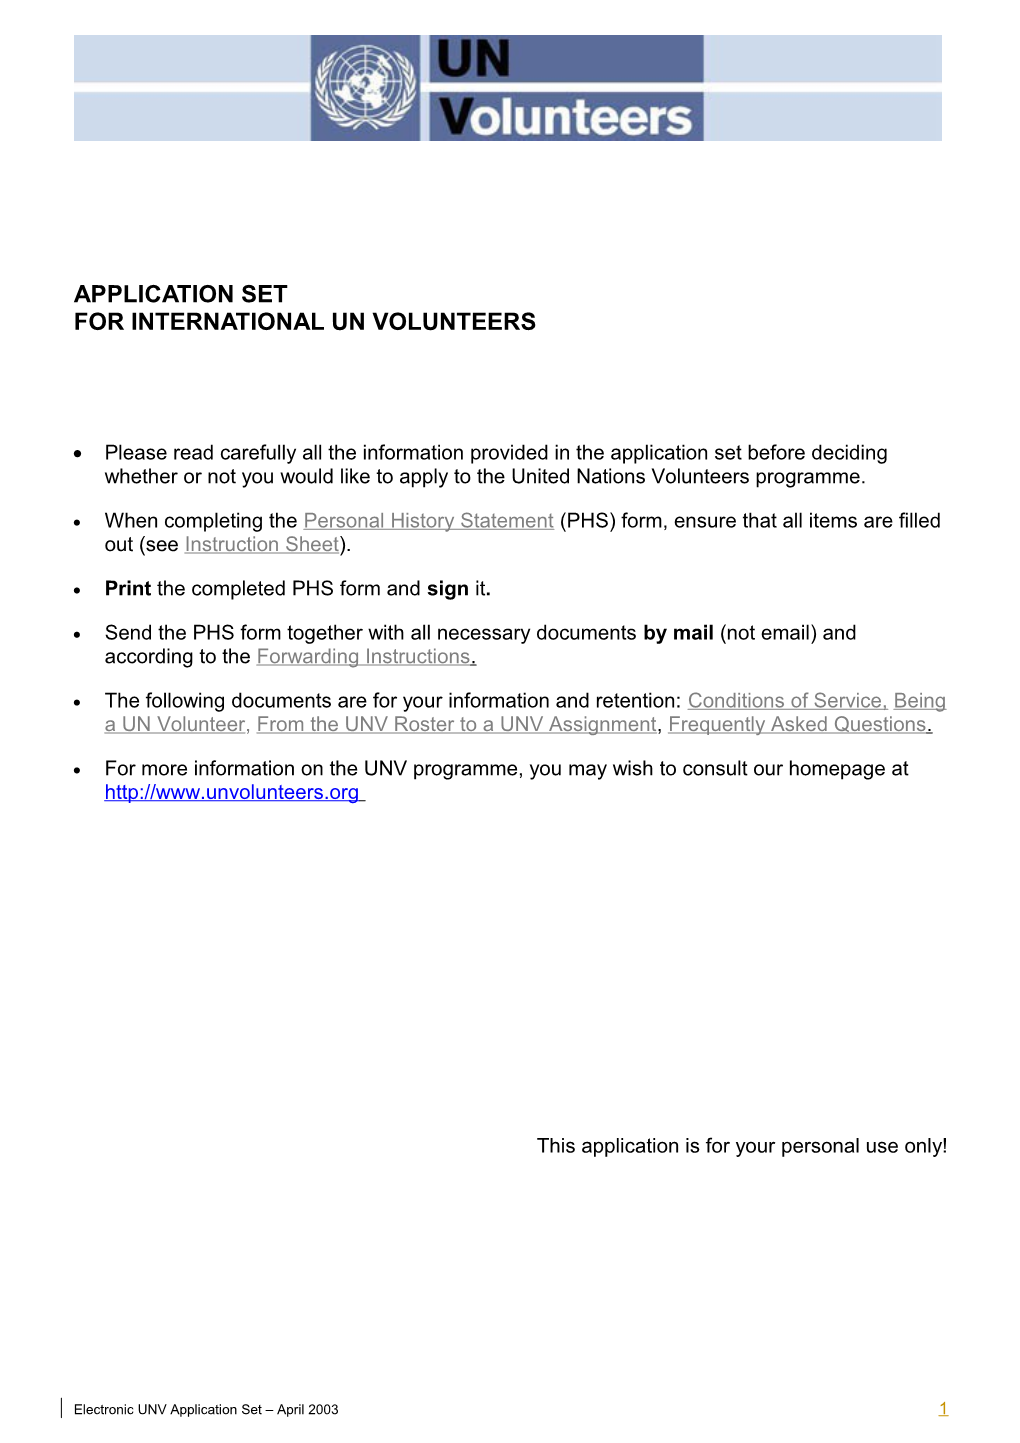 Application Setfor International UN Volunteers